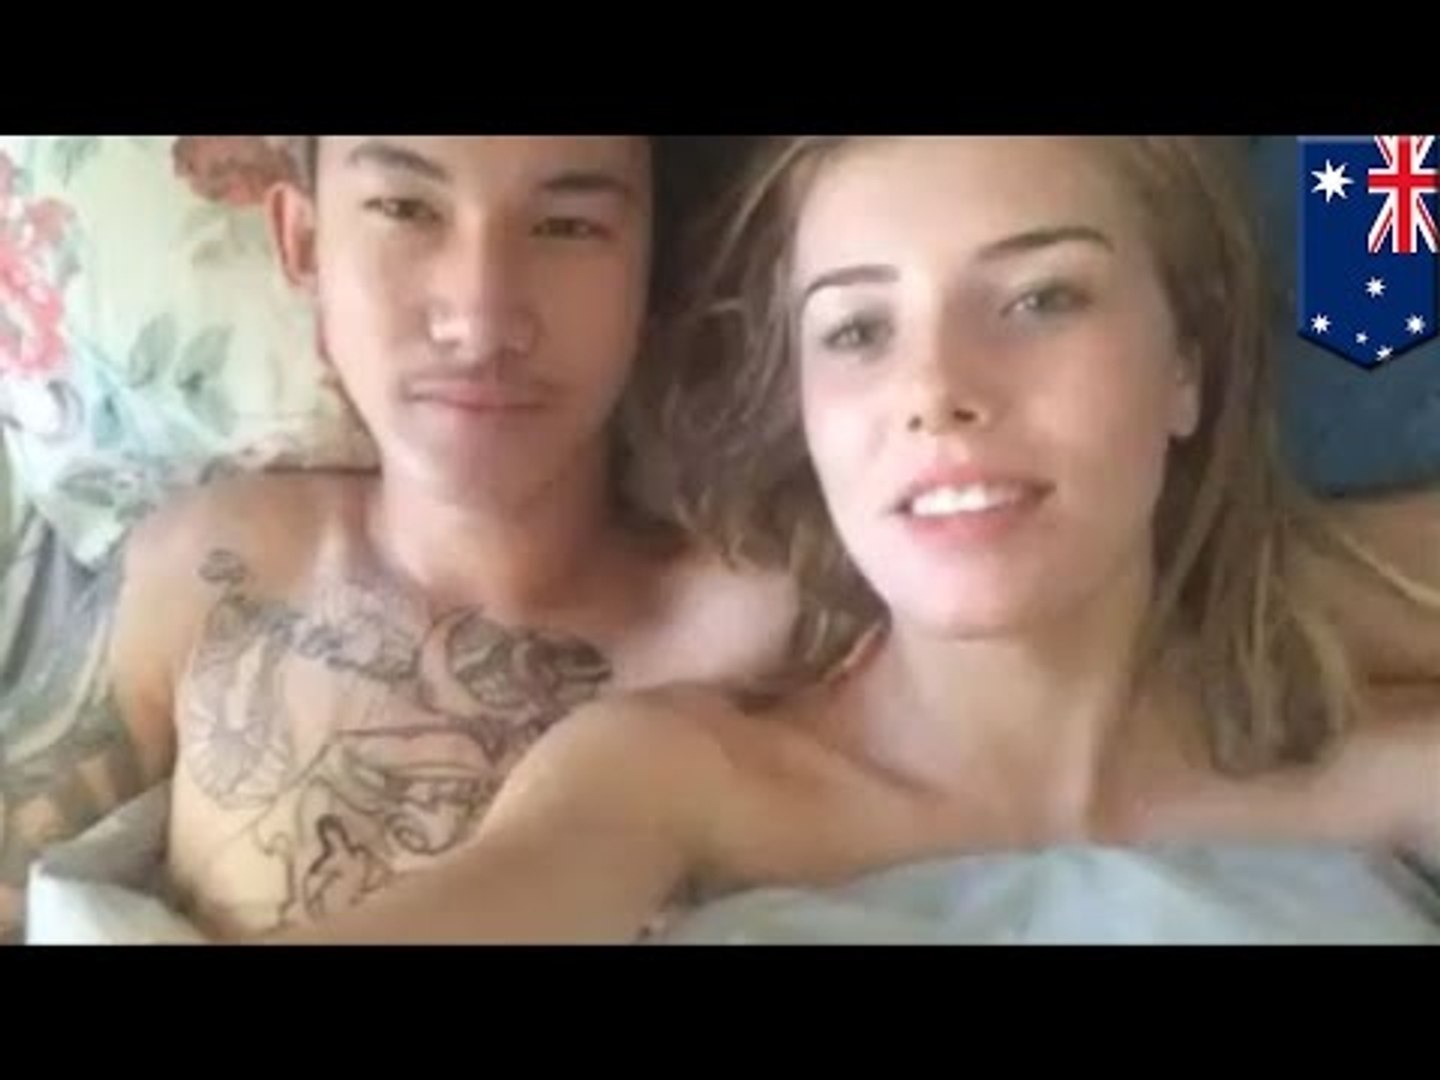 Post-sex selfie Aussie babe gets revenge on cheating ex after posting video online - TomoNews image